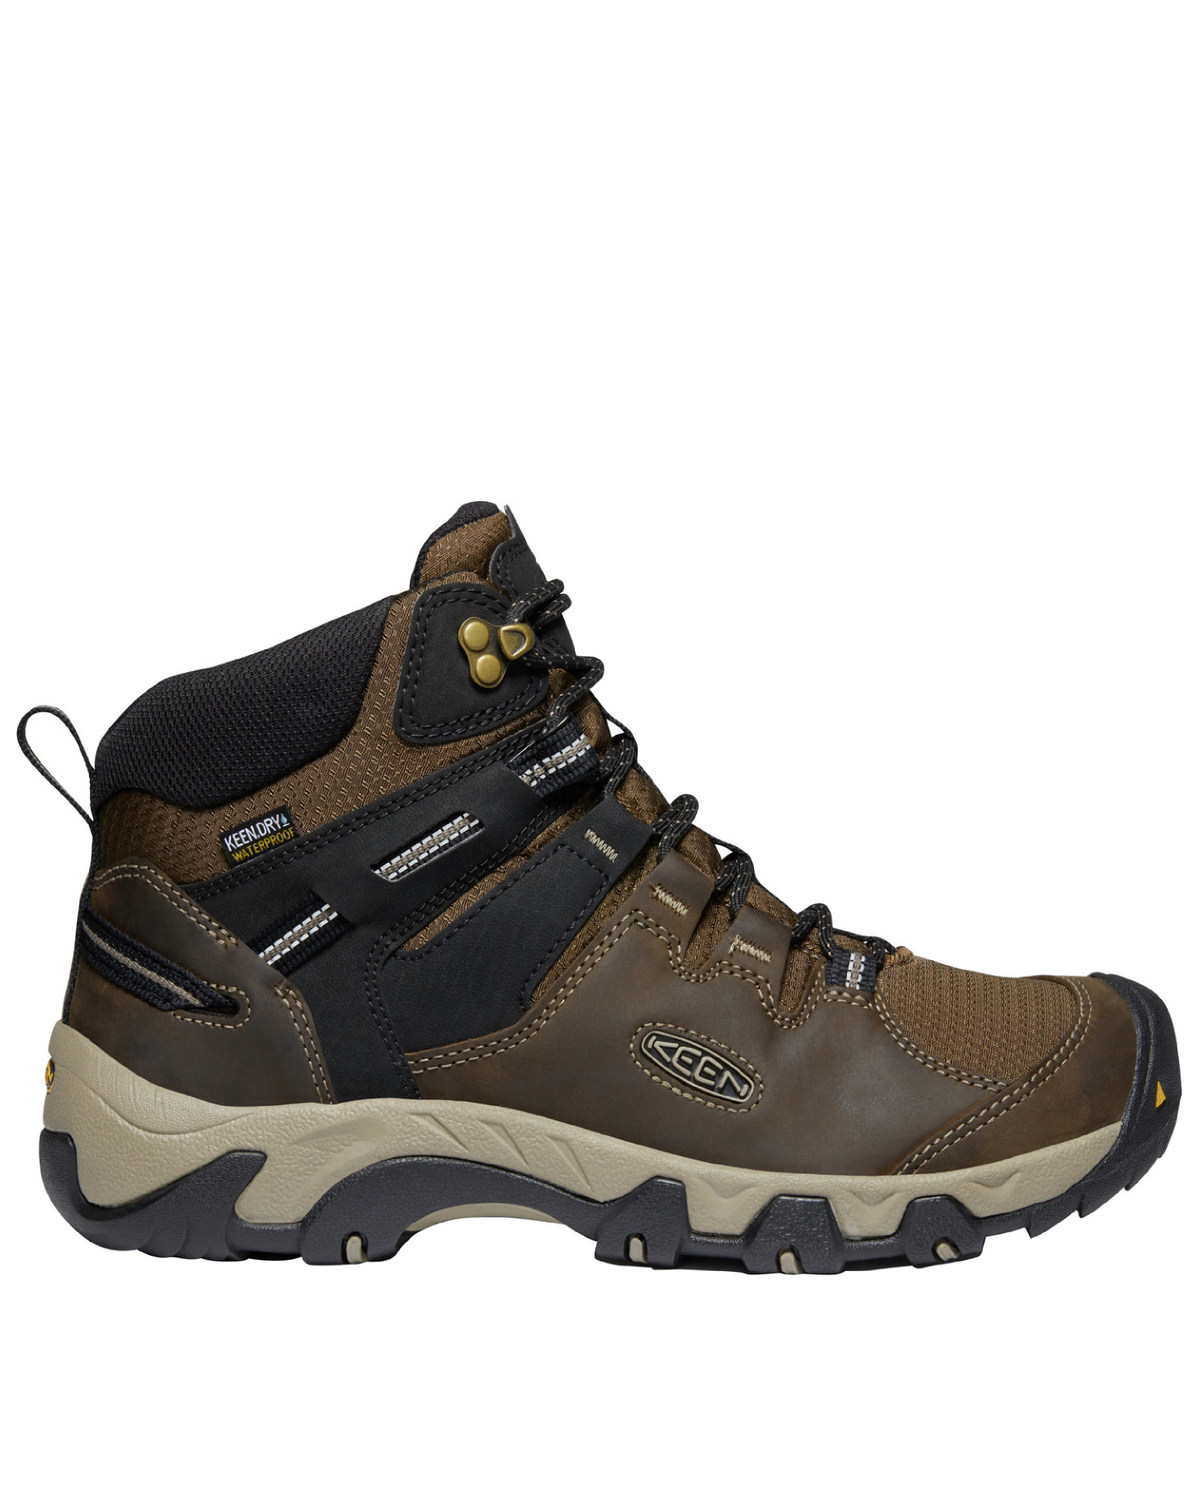 Keen Men's Steens Waterproof Hiking Boots - Soft Toe | Boot Barn